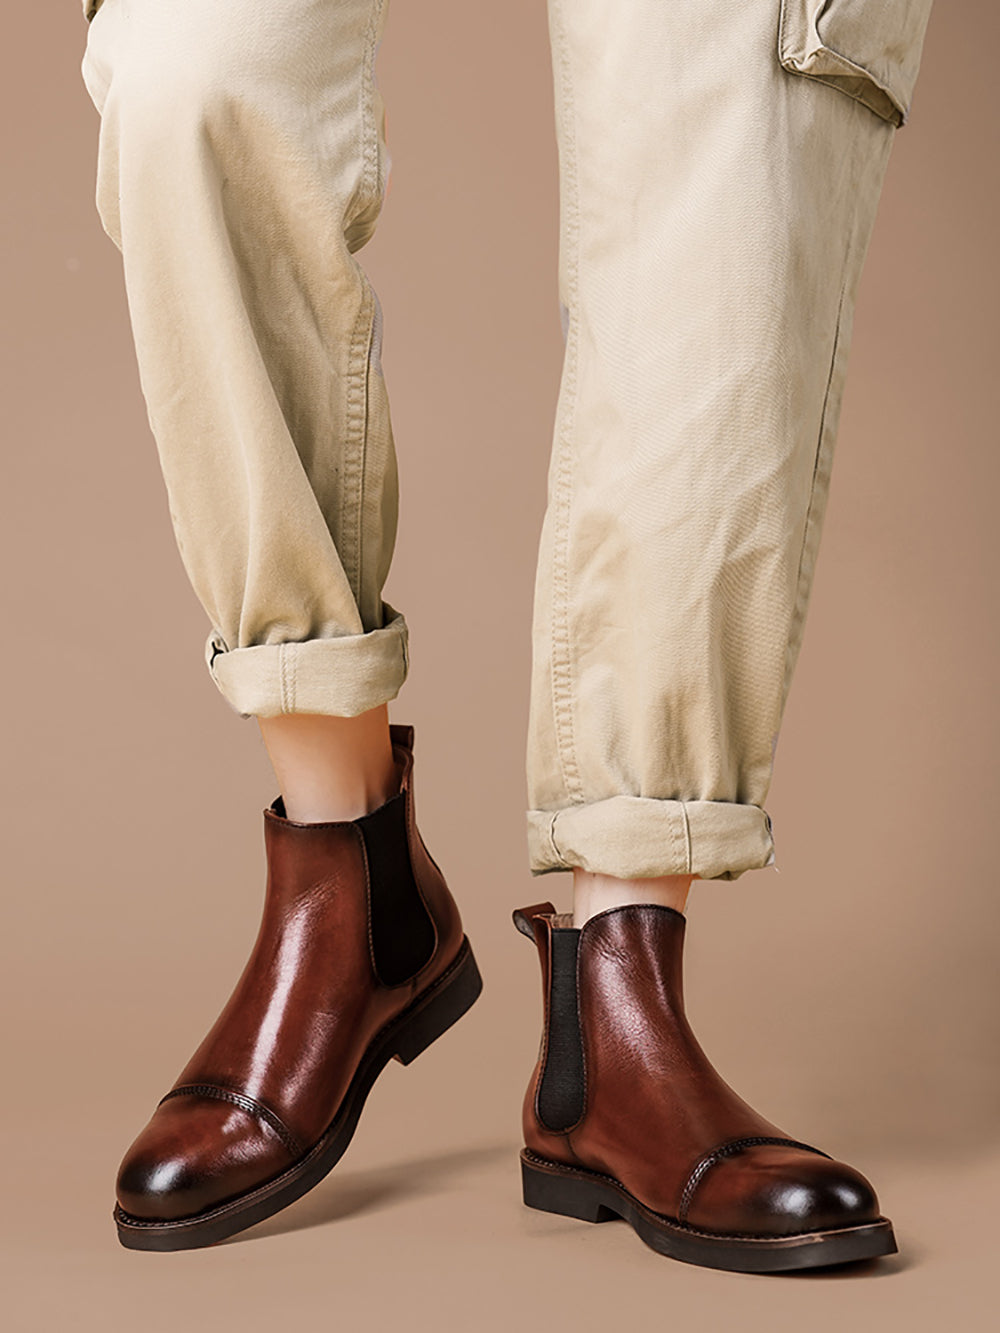 Men's Retro Classic Handmade Chelsea Boots